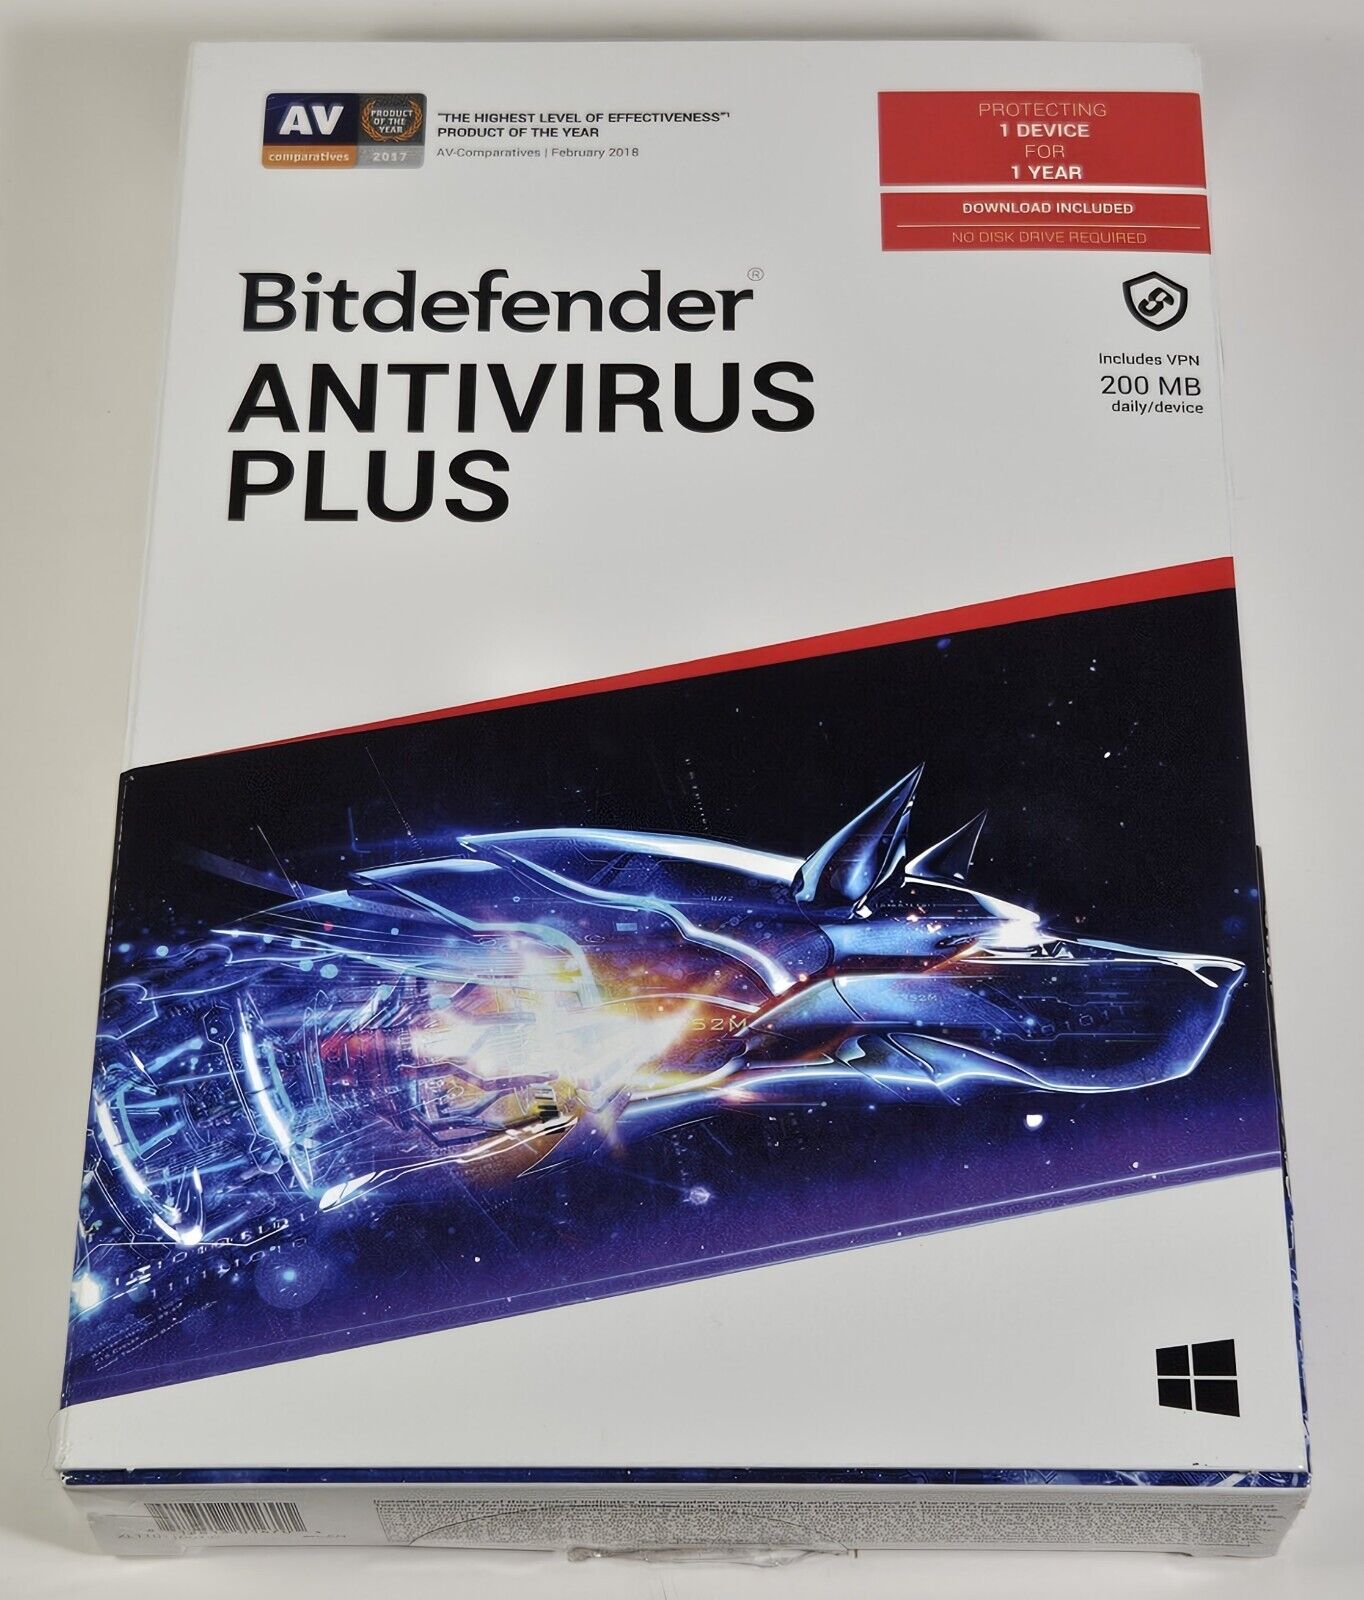 Bitdefender Antivirus Plus 2017 - 1 Year 1 Windows Device Protection